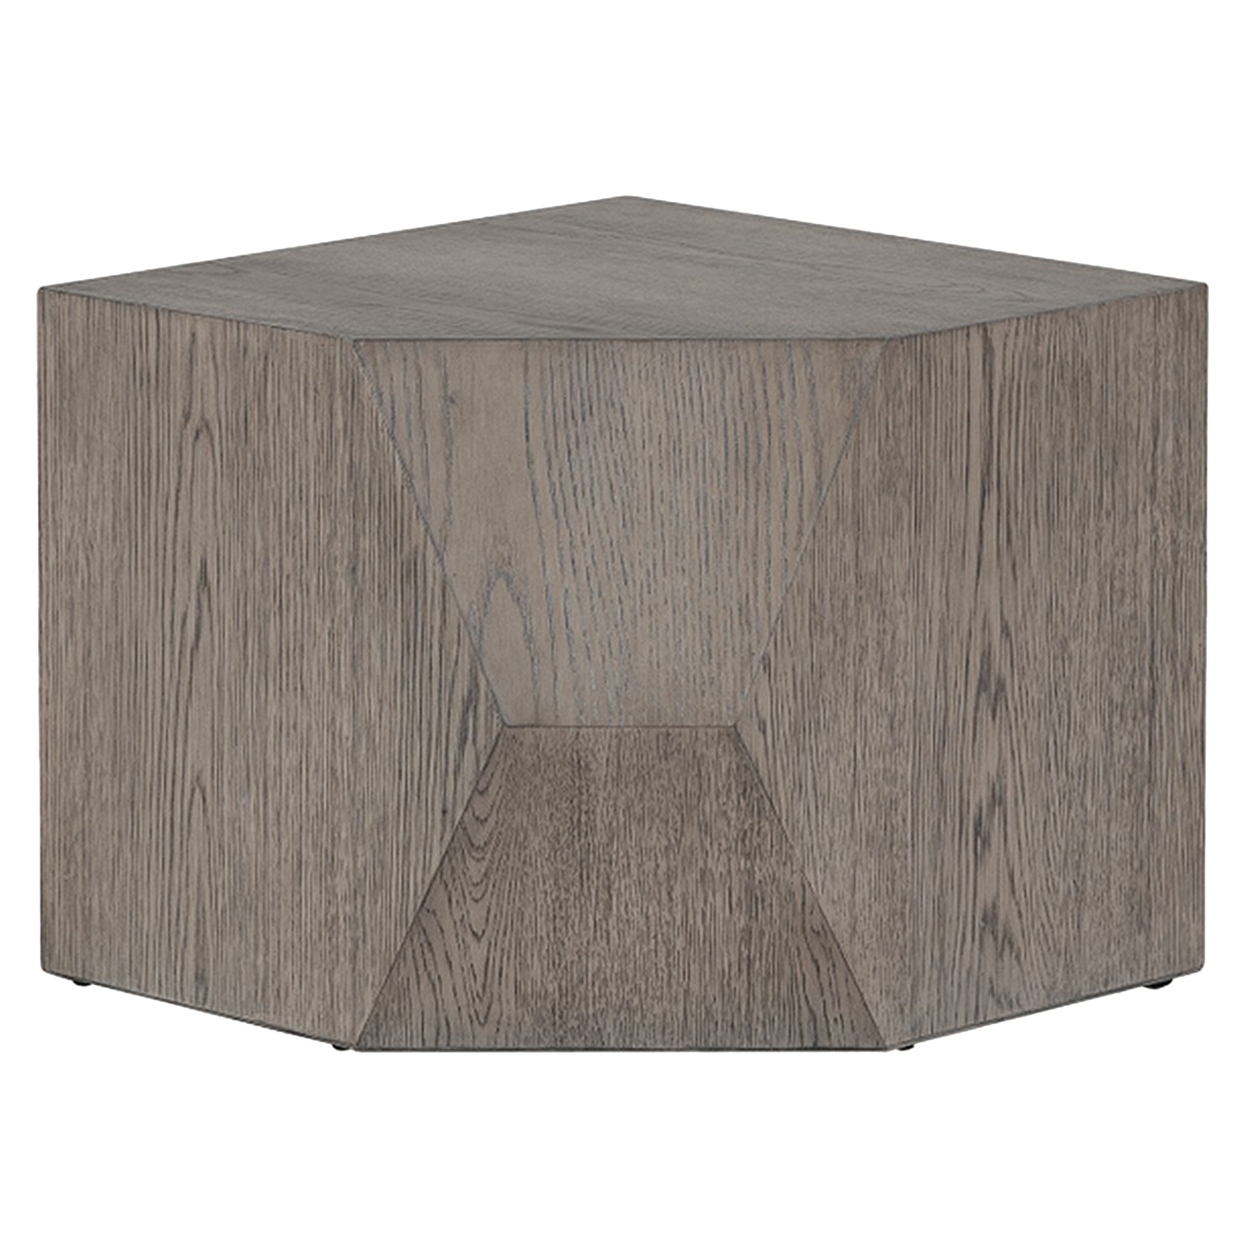 20 Inch Modular Coffee Table, Geometric Angled Style, Rustic Ash Oak Finish- Saltoro Sherpi